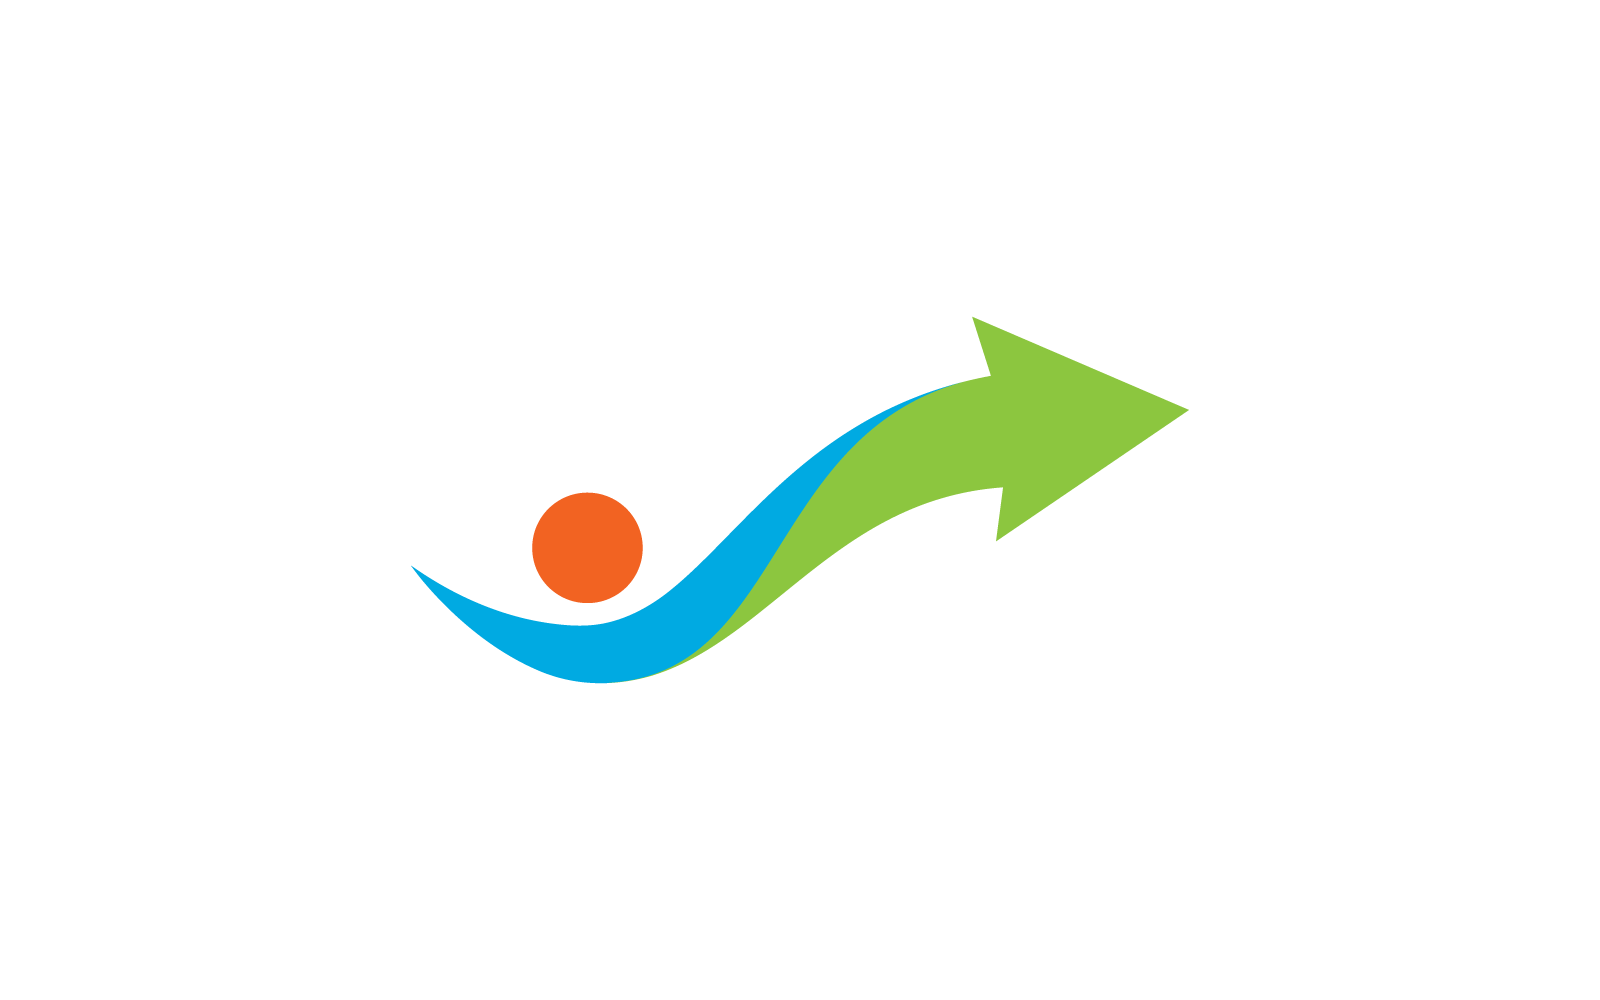 Business Trading logo vector design template